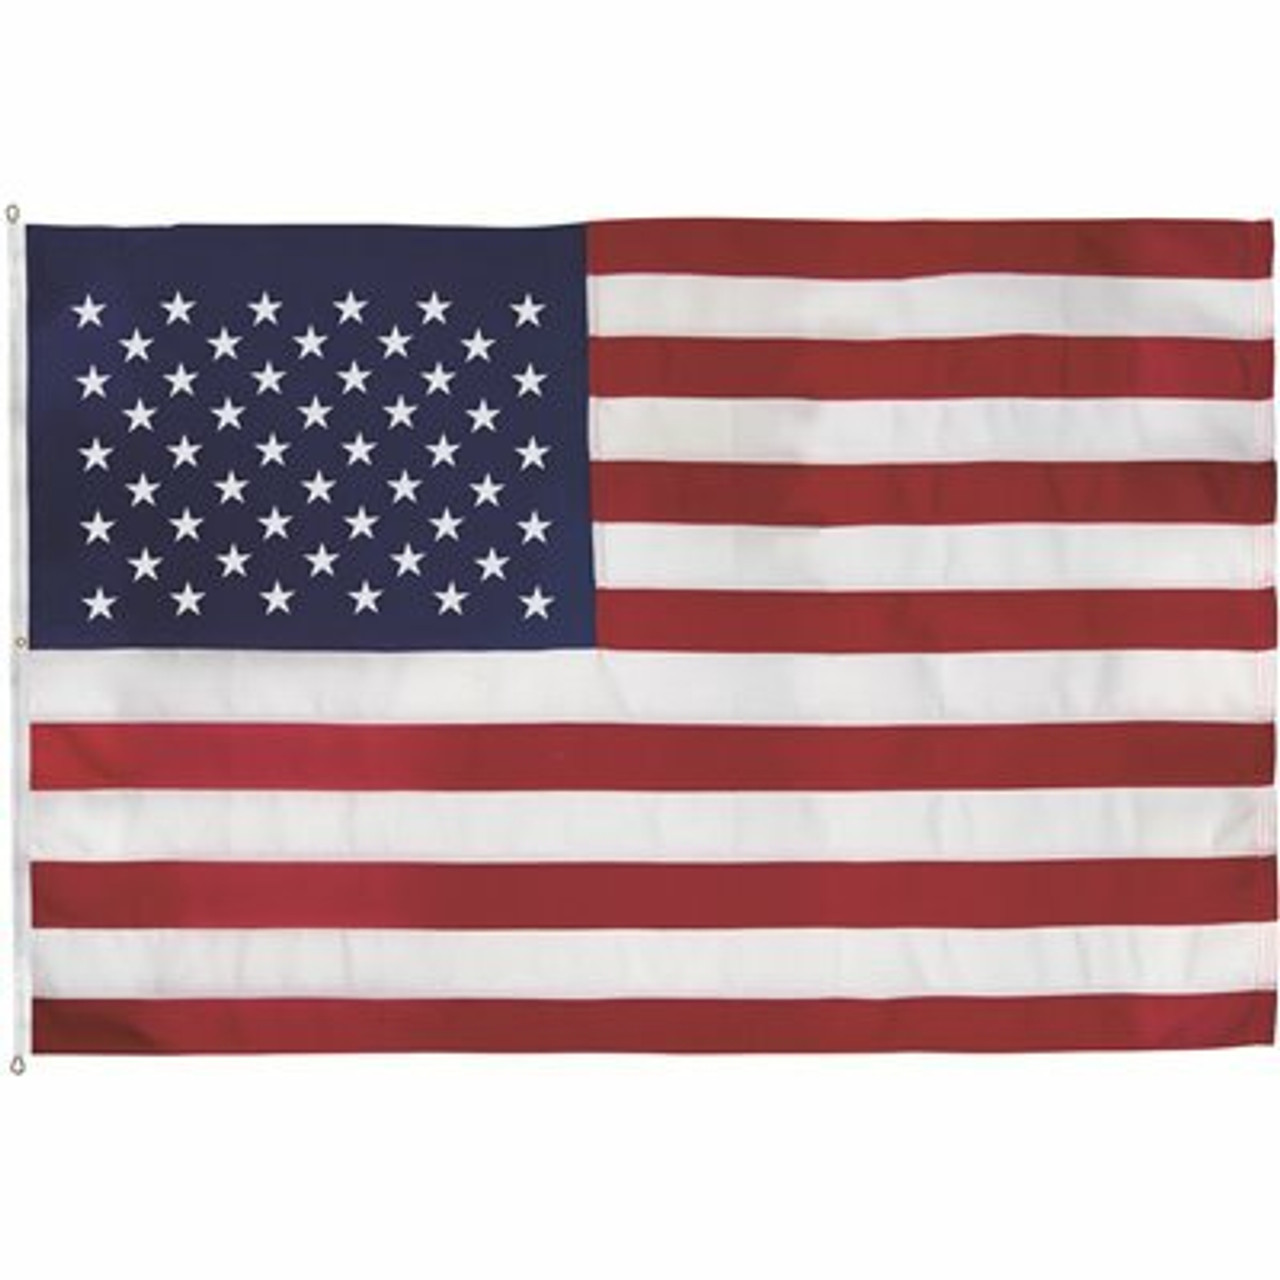 Koralex Ii 8 Ft. X 12 Ft. Spun Polyester Large Commercial United States Flag